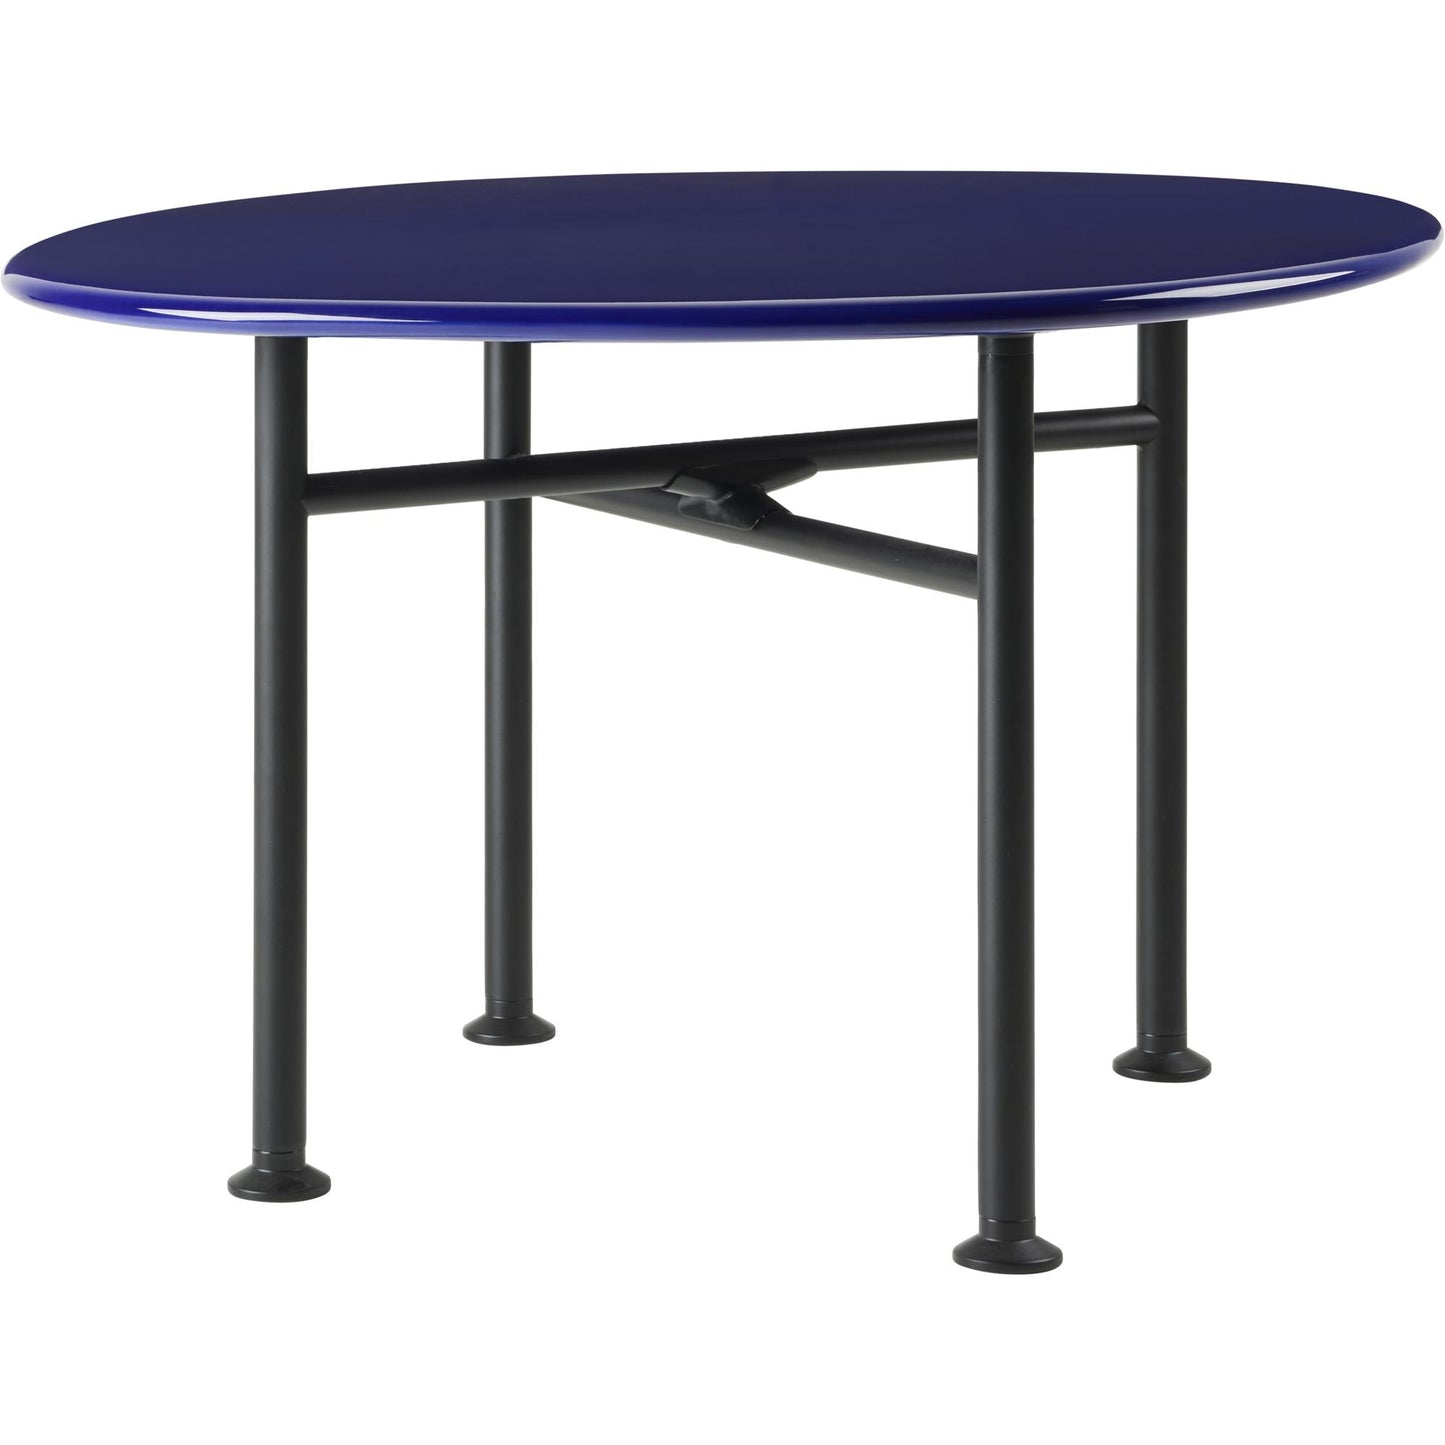 Carmel Coffee Table 60x60 by GUBI #Pacific Blue